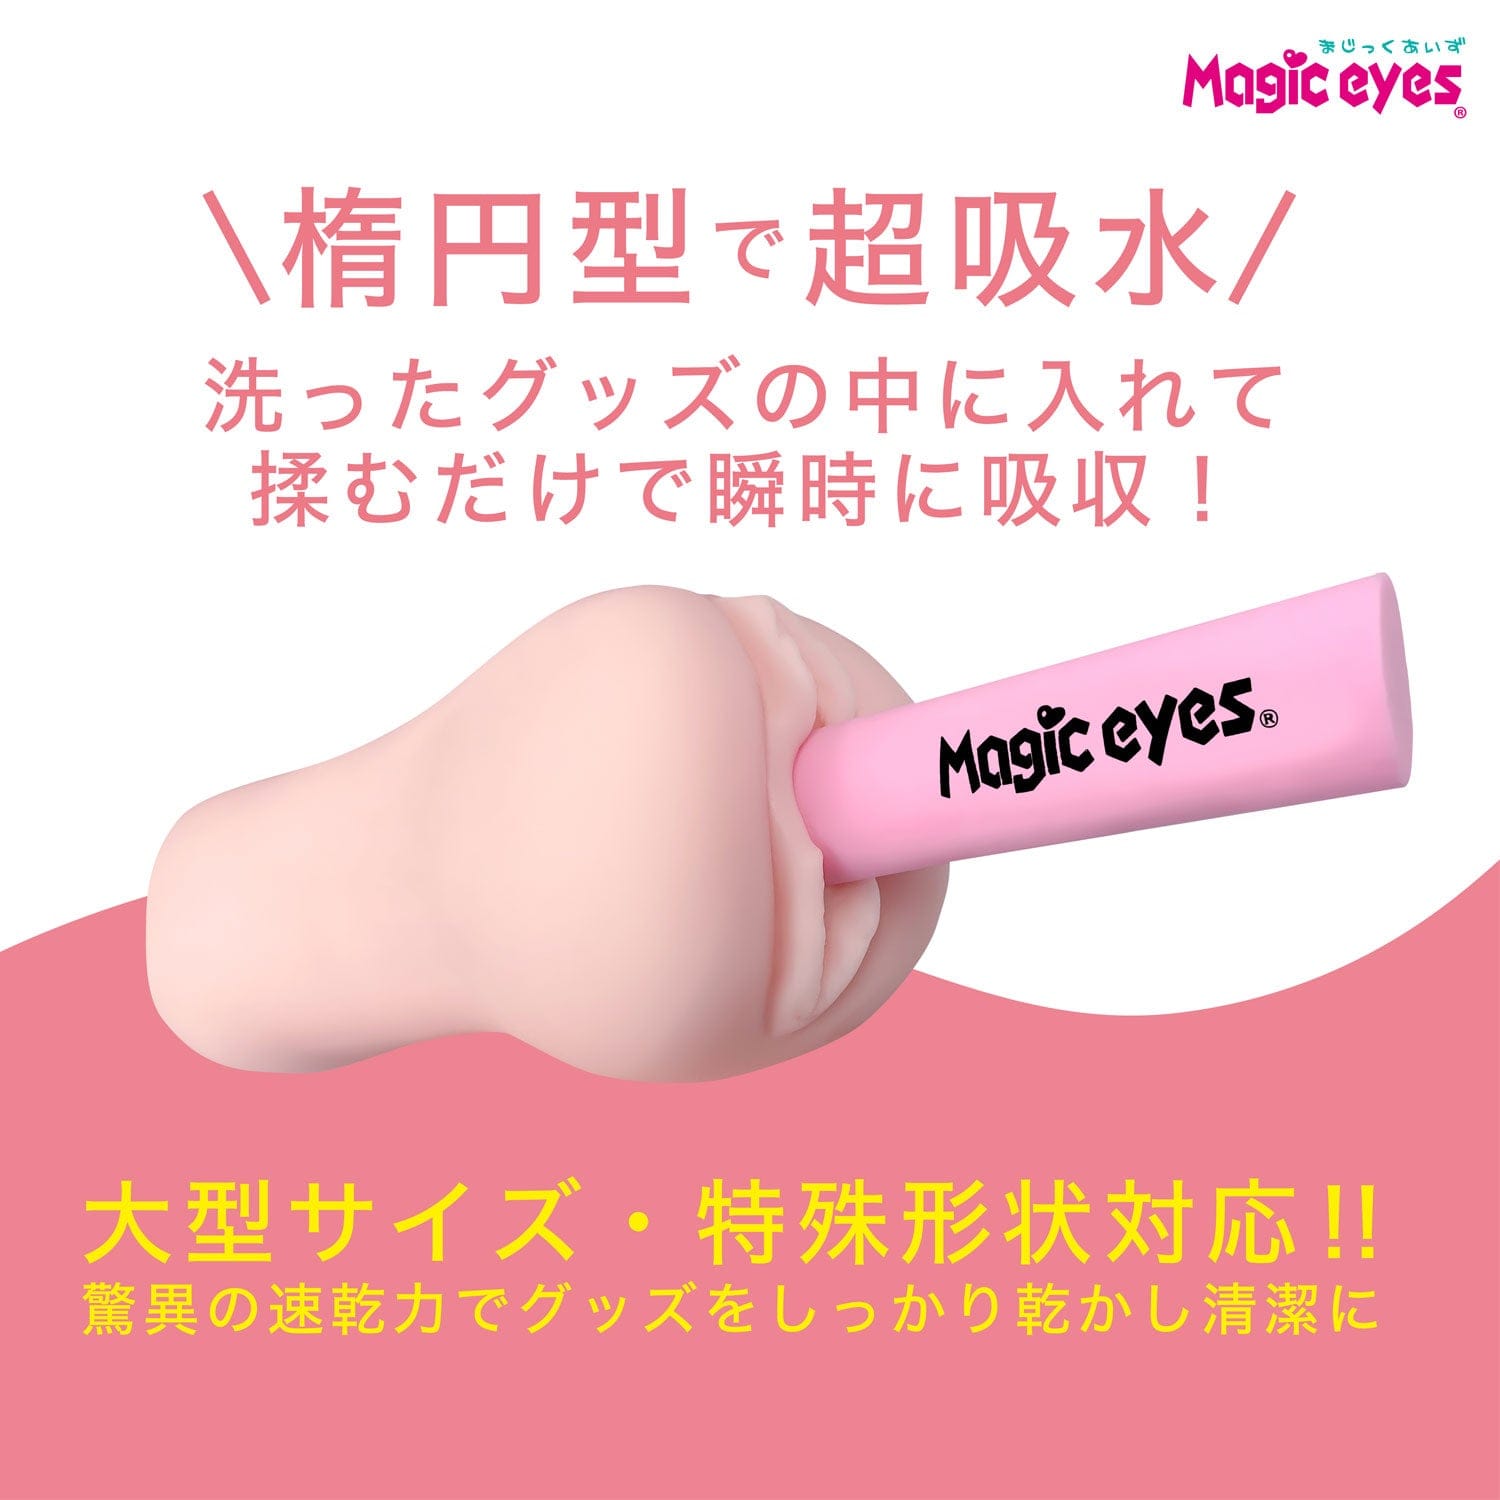 Magic Eyes - PVA Onahole Dry Magic Stick Accessories 4571324243900 CherryAffairs